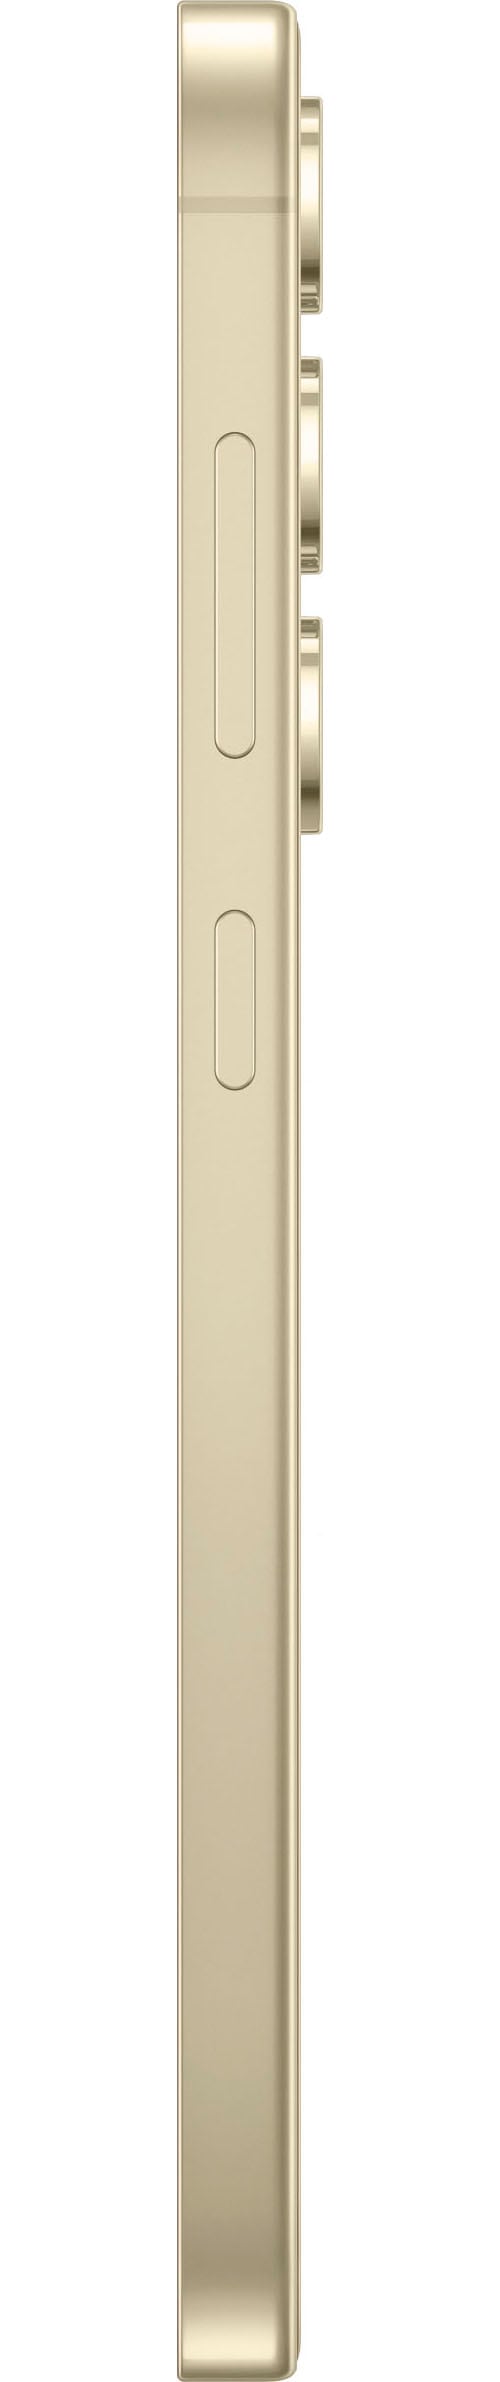 Samsung Smartphone »Galaxy S24 256GB«, Amber Yellow, 15,64 cm/6,2 Zoll, 256 GB Speicherplatz, 50 MP Kamera, AI-Funktionen